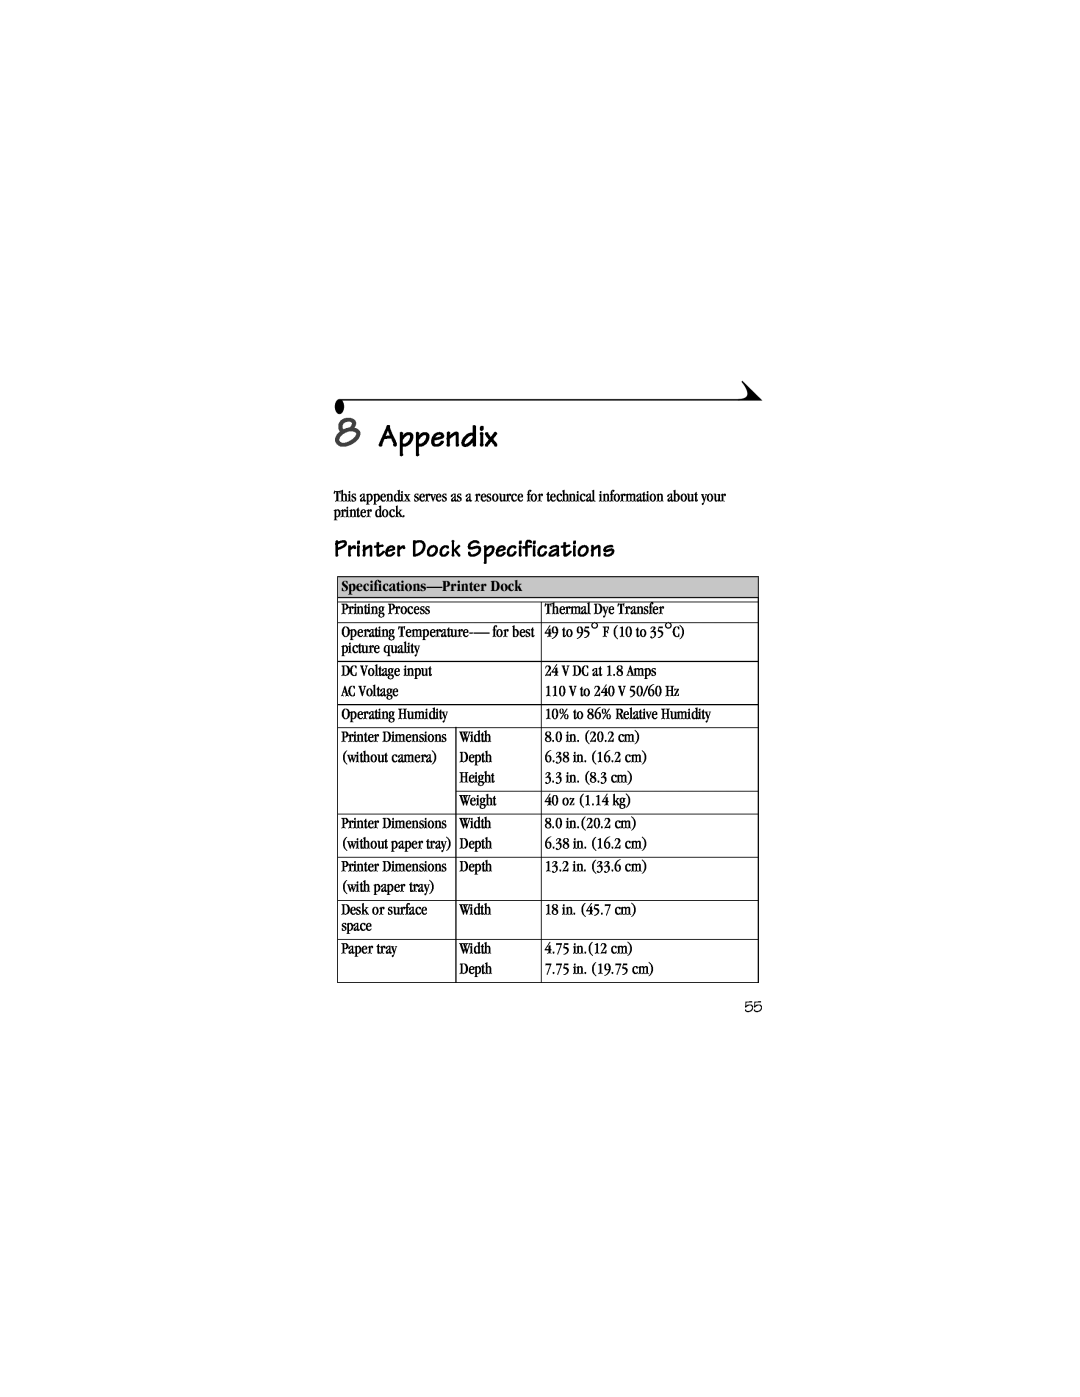 Kodak 4000 manual Appendix, Printer Dock Specifications, Specifications-PrinterDock 